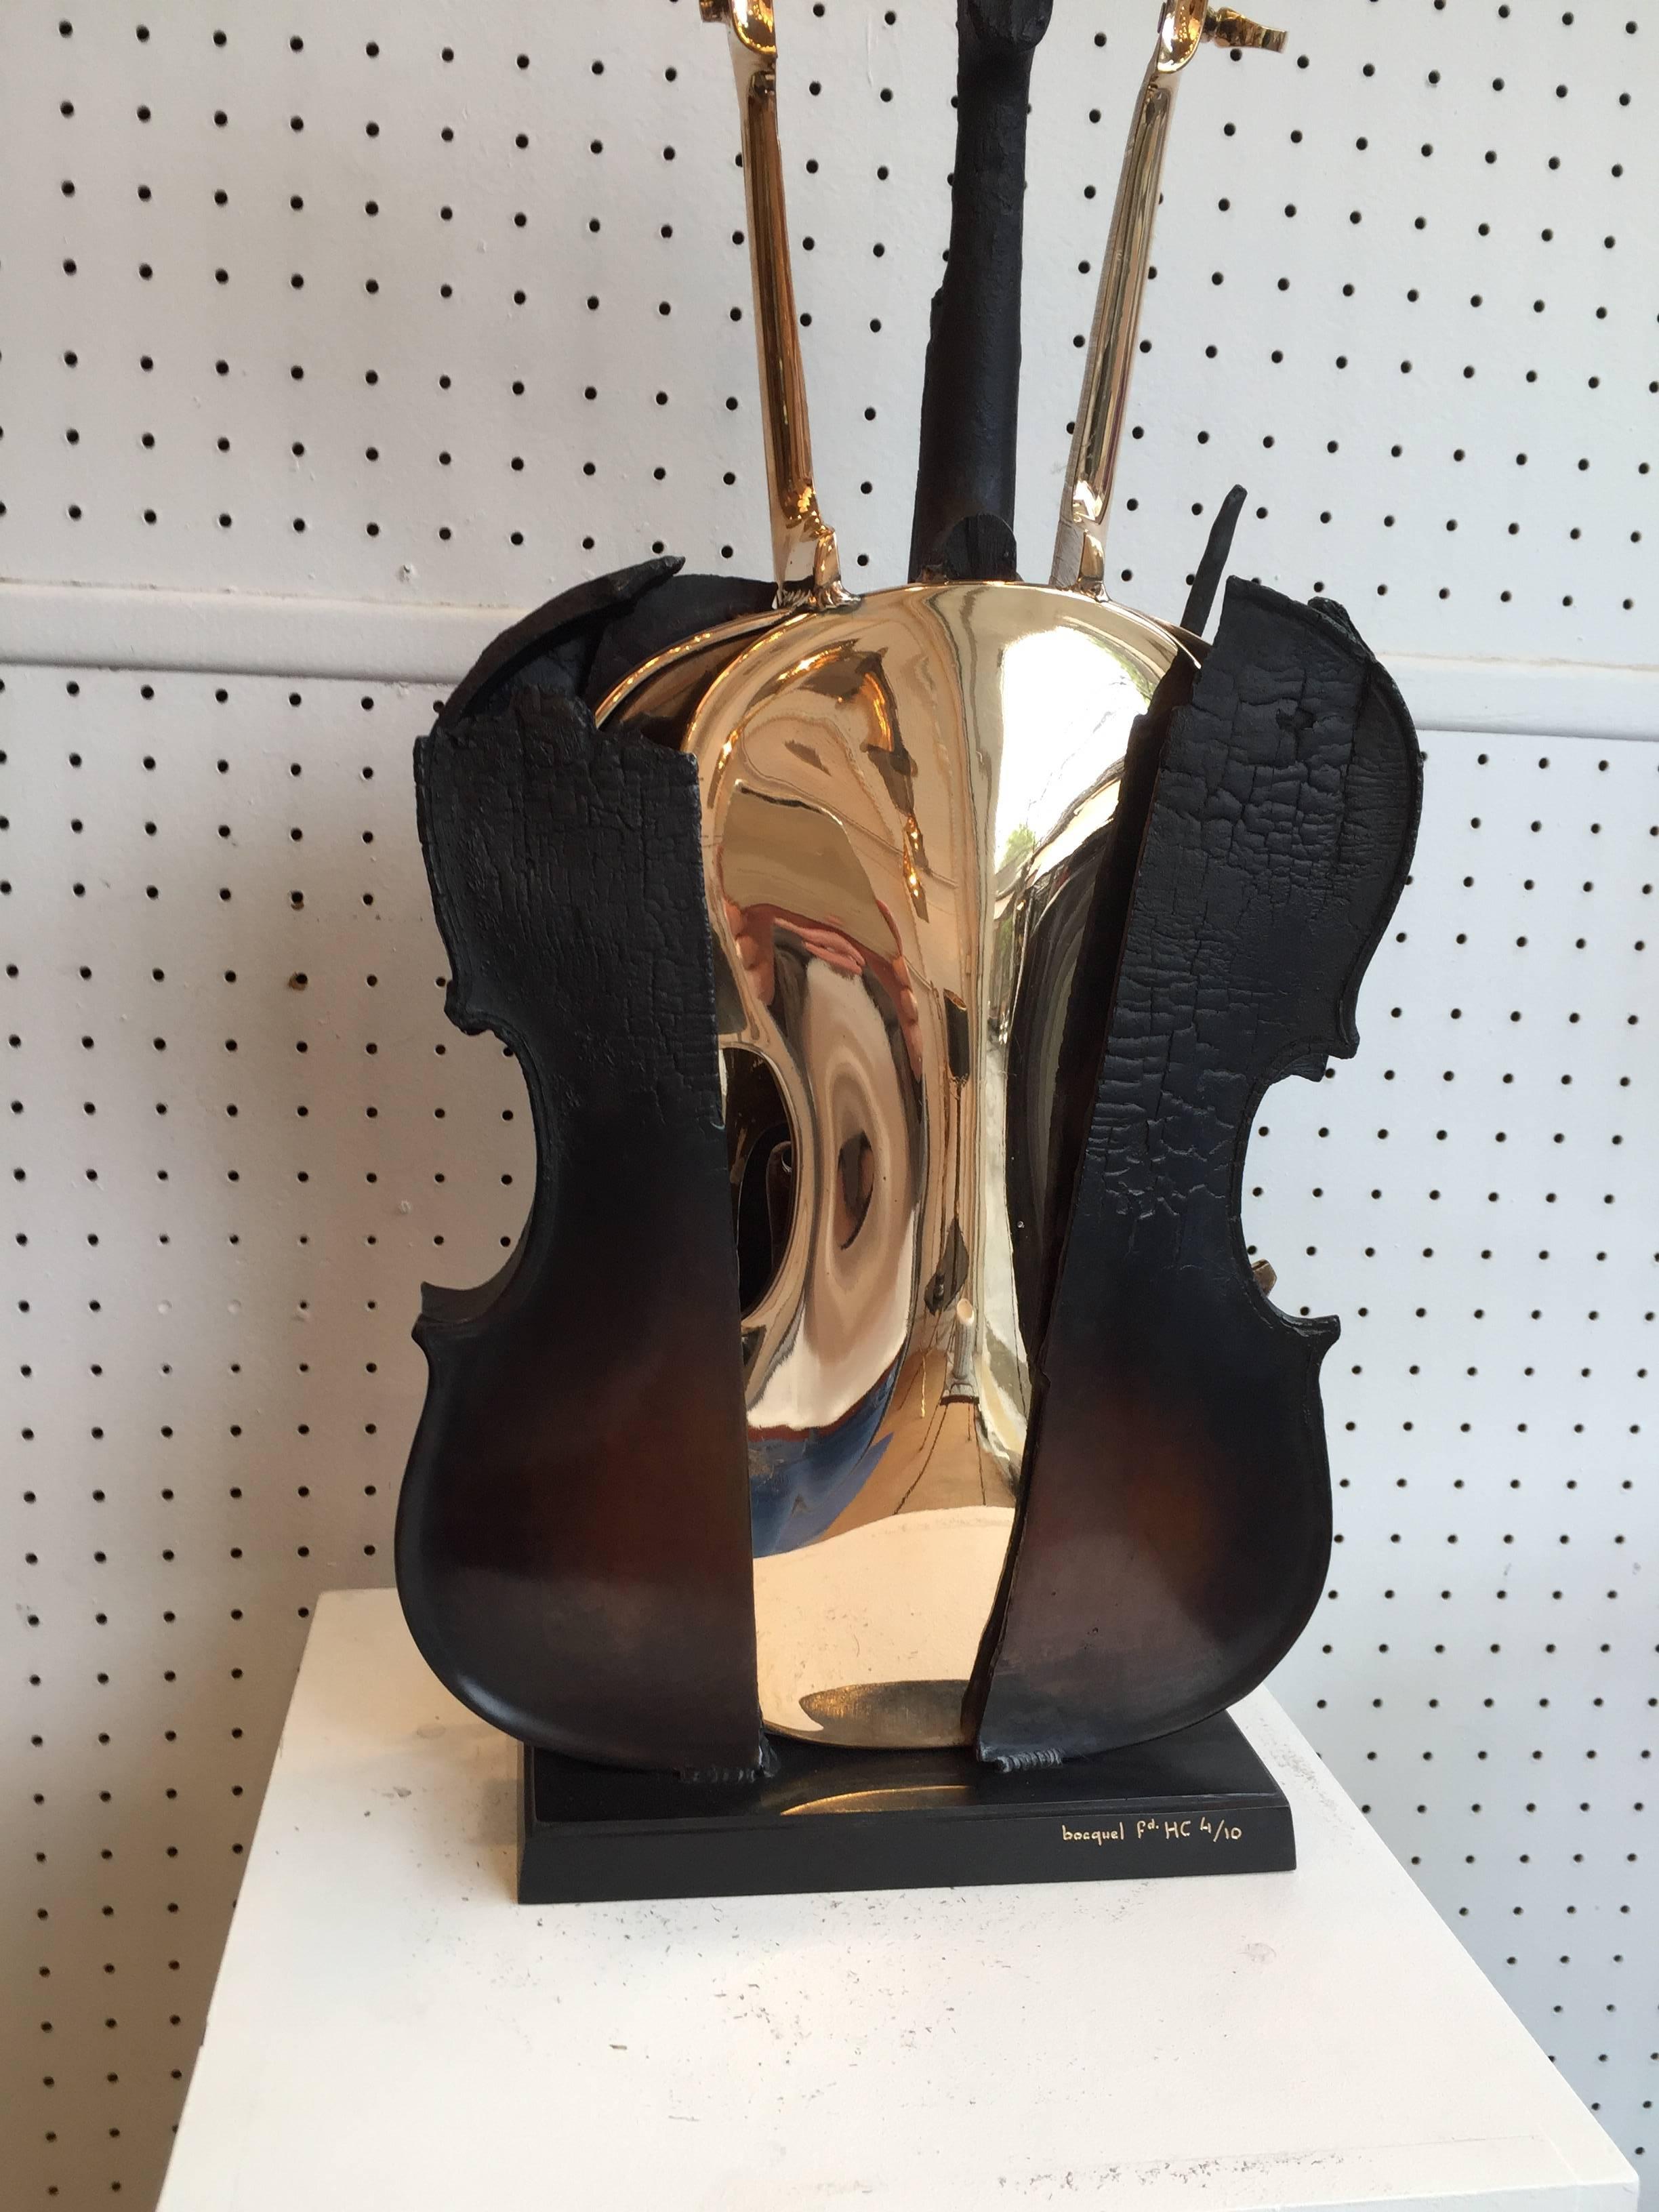 Arman Bronze Violin 